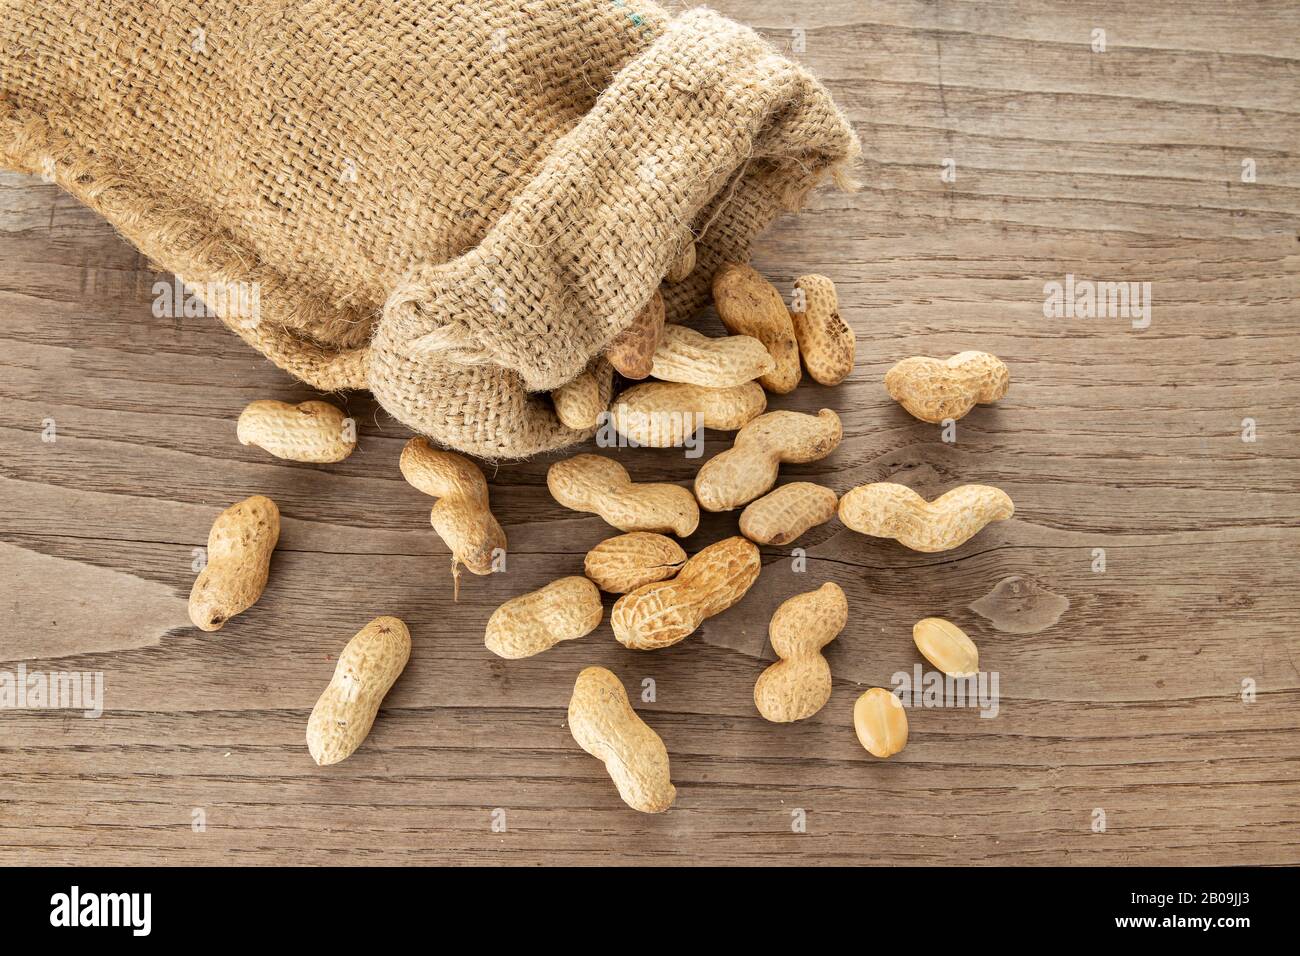 Burlap sack and Peanuts on rustic wooden table. Arachis hypogaea Stock Photo